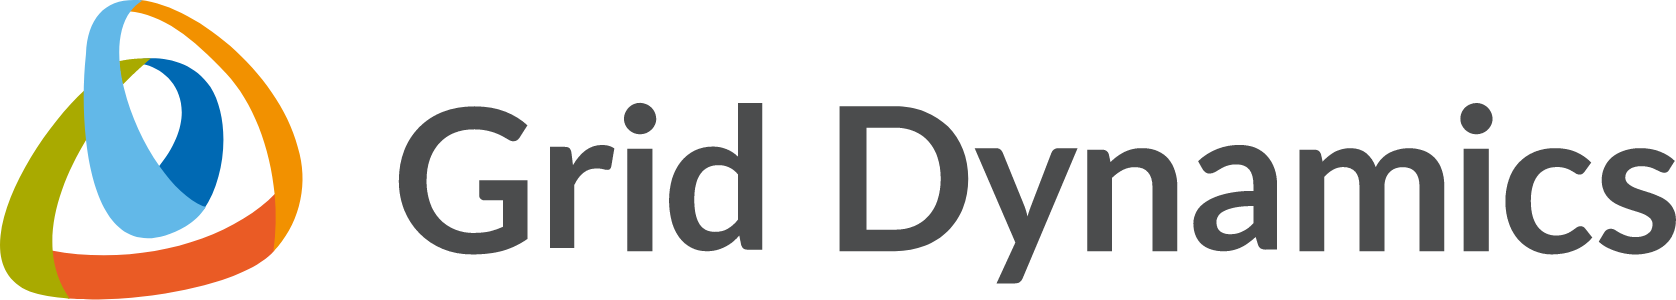 Grid Dynamics logo large (transparent PNG)